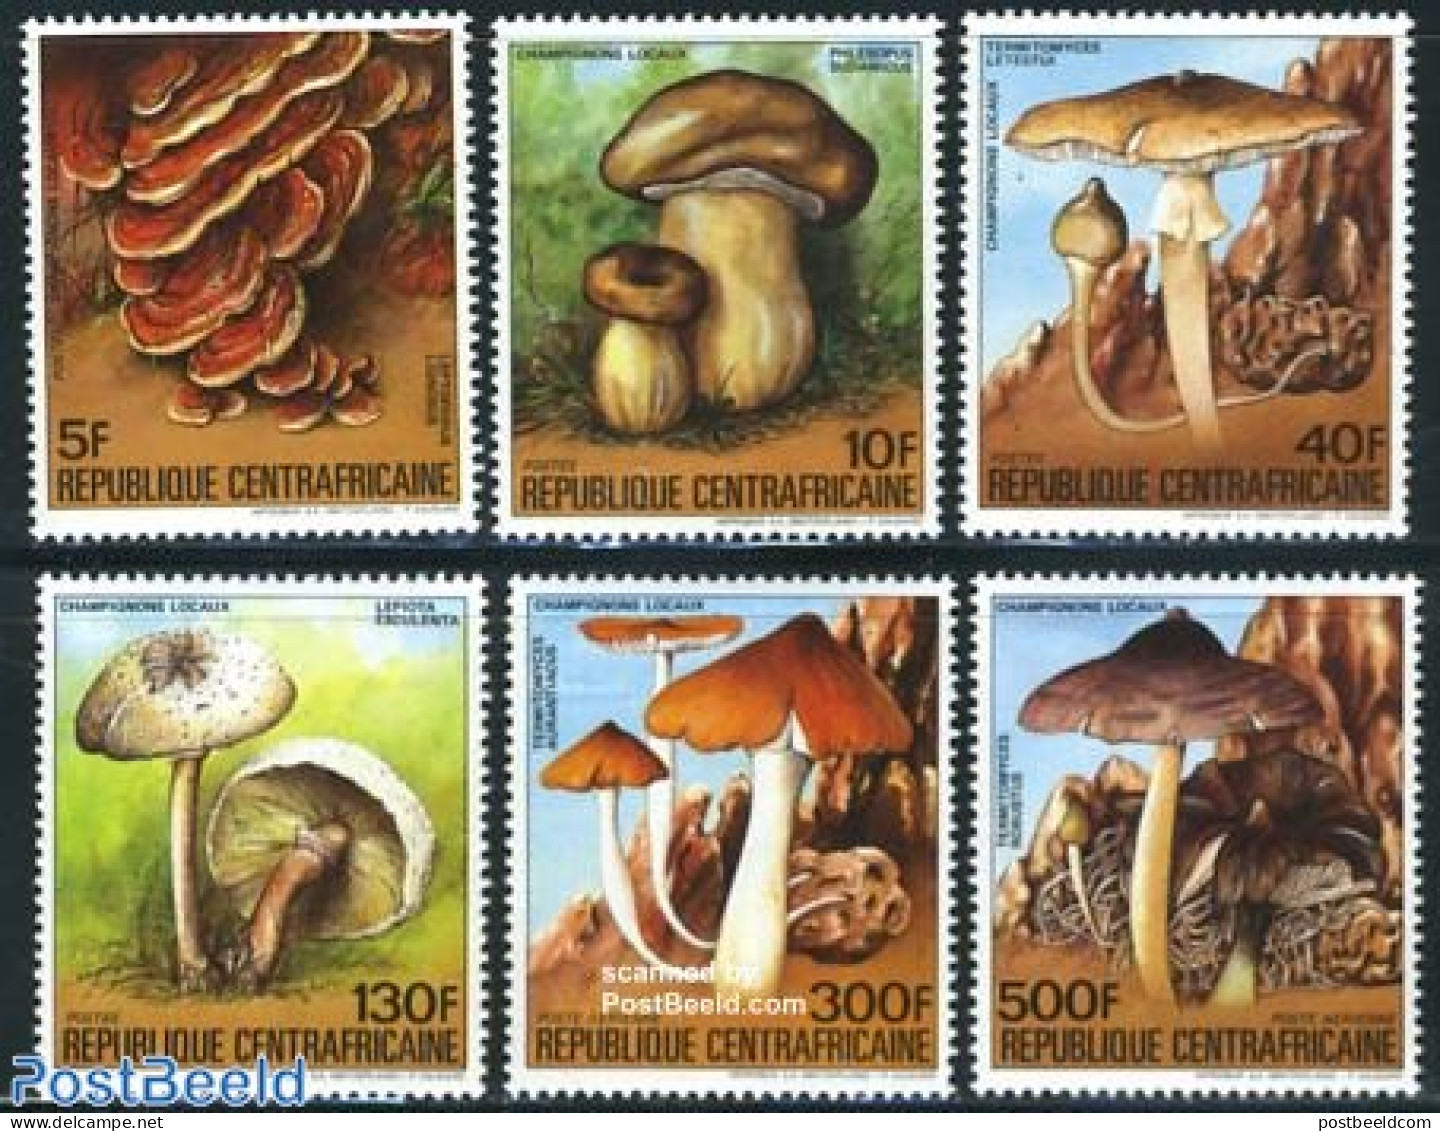 Central Africa 1984 Mushrooms 6v, Mint NH, Nature - Mushrooms - Champignons